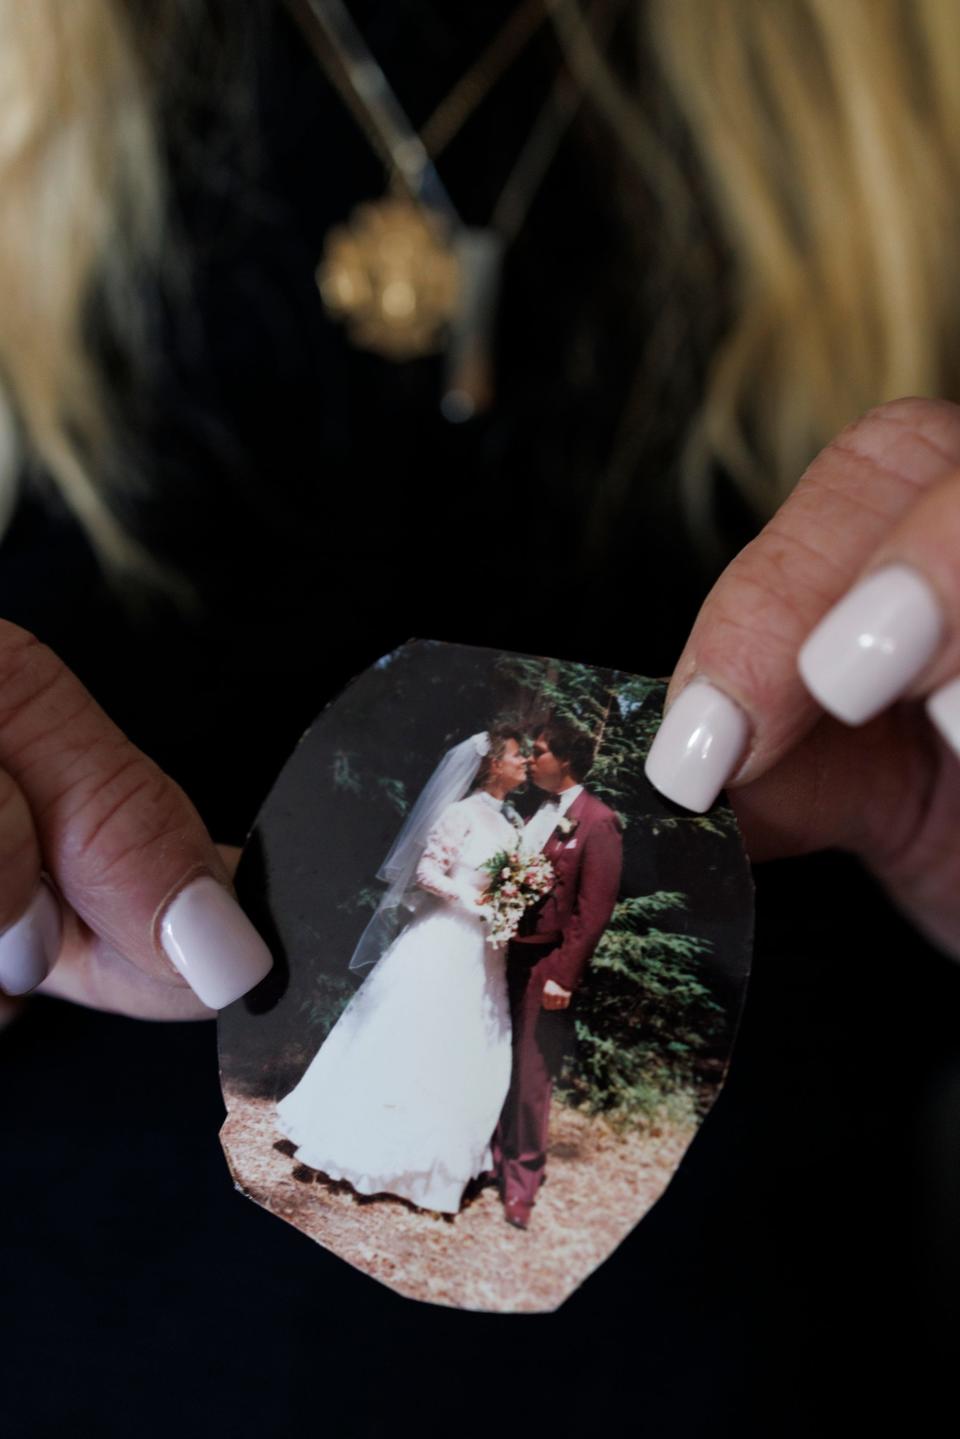 Jocelyn Cronin holds a wedding photo of her and her husband in Petaluma, California. 